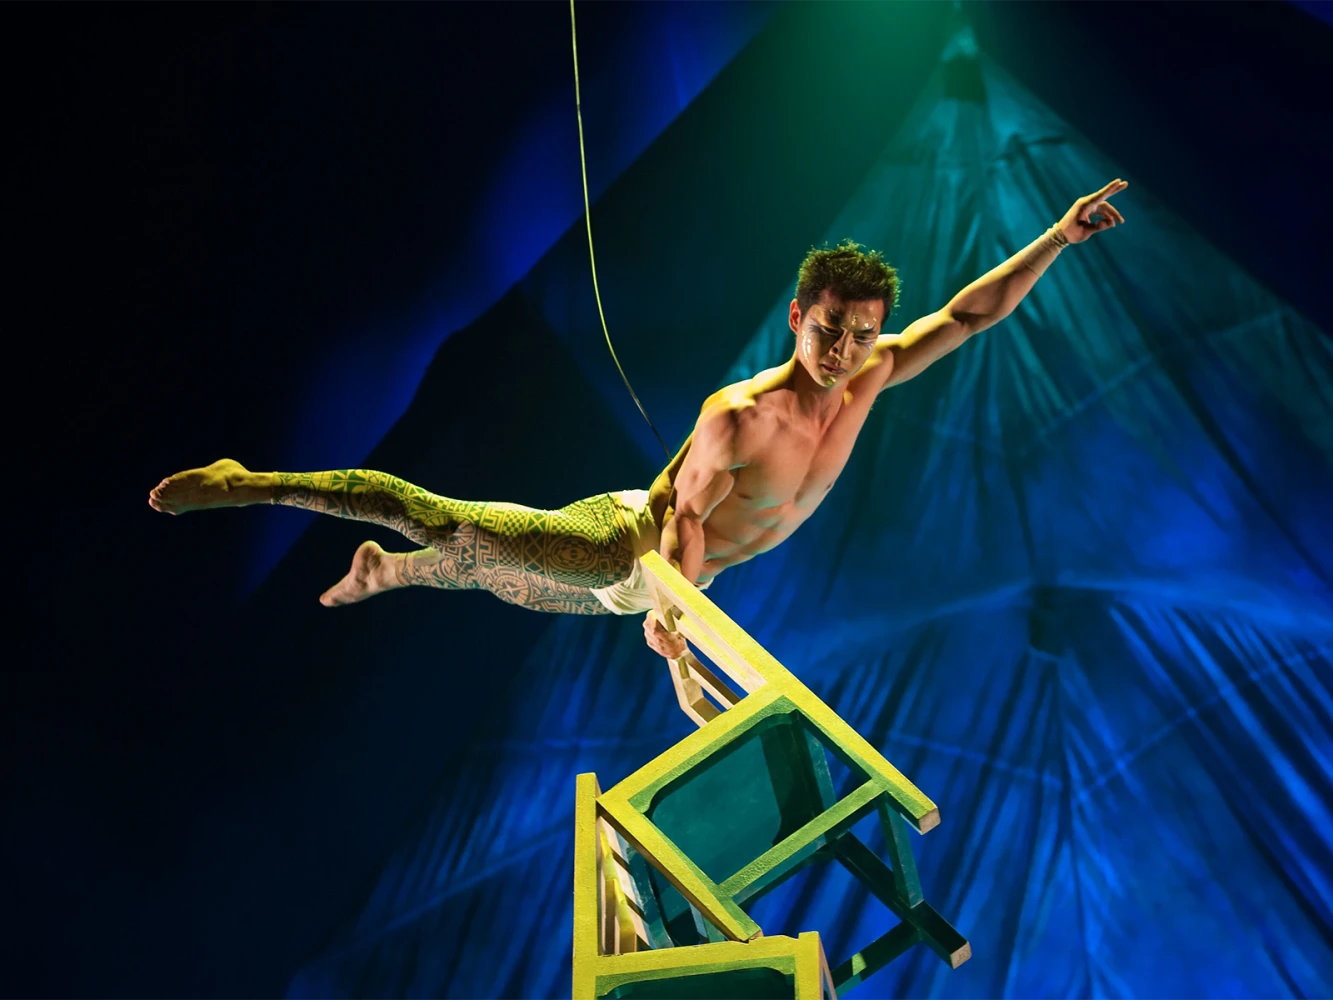 Cirque du Soleil: KOOZA - Orange County: What to expect - 1